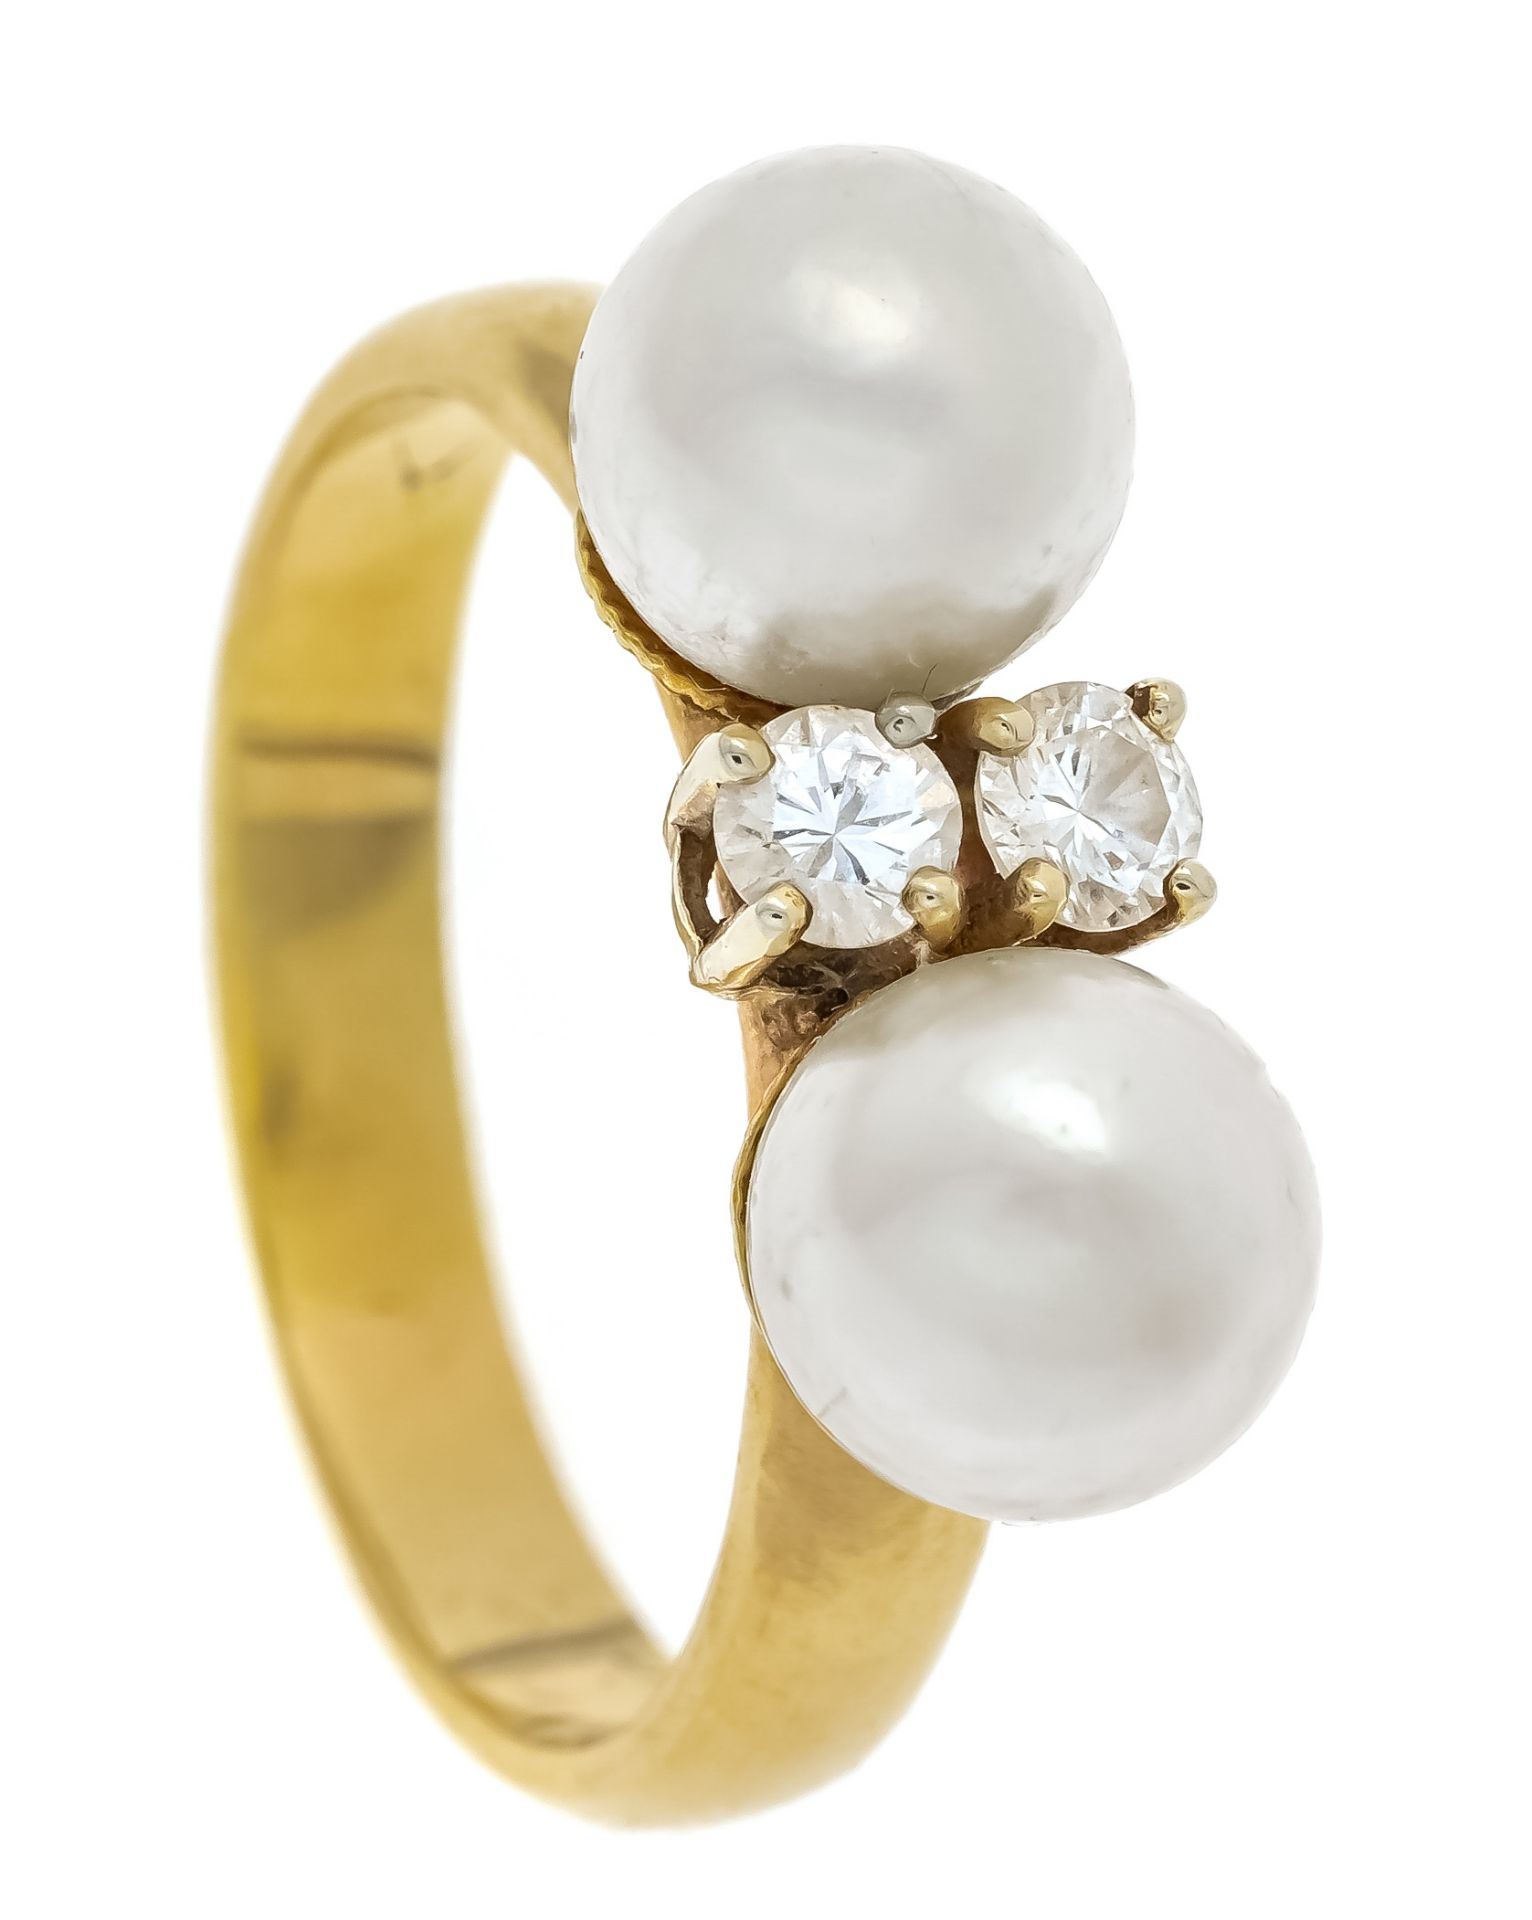 Akoya diamond ring GG 585/000 with 2 creamy white Akoya pearls 7.2 mm and 2 brilliant-cut